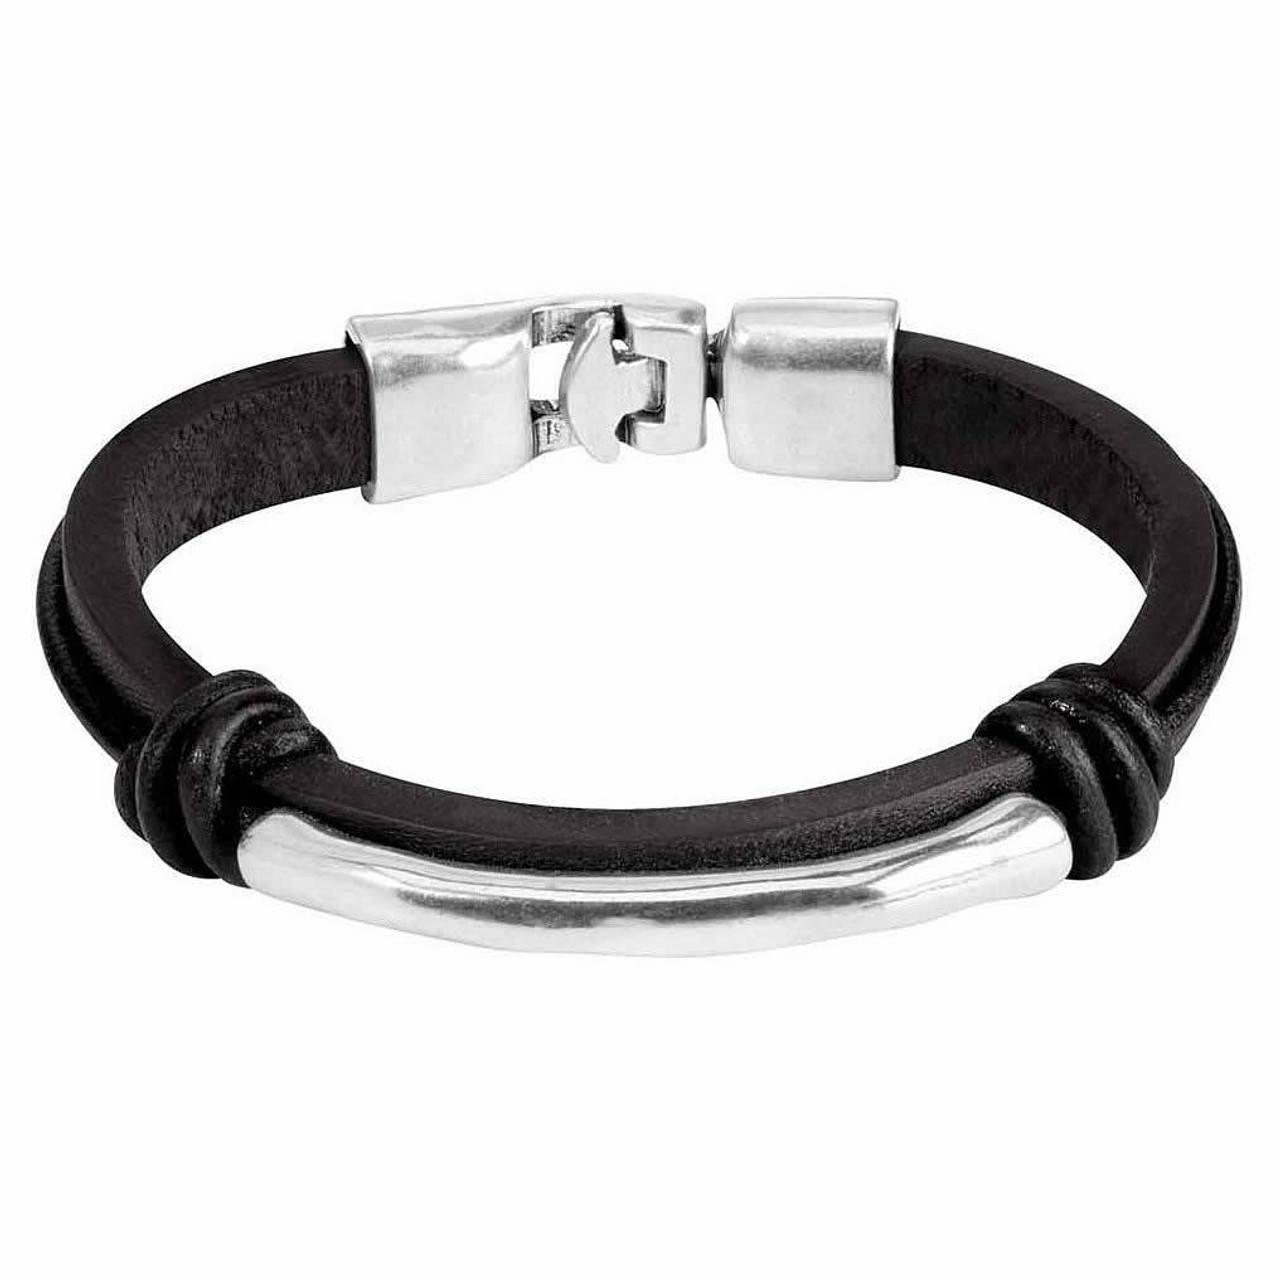 Benito Double Wrap Leather Bracelet Black And Black